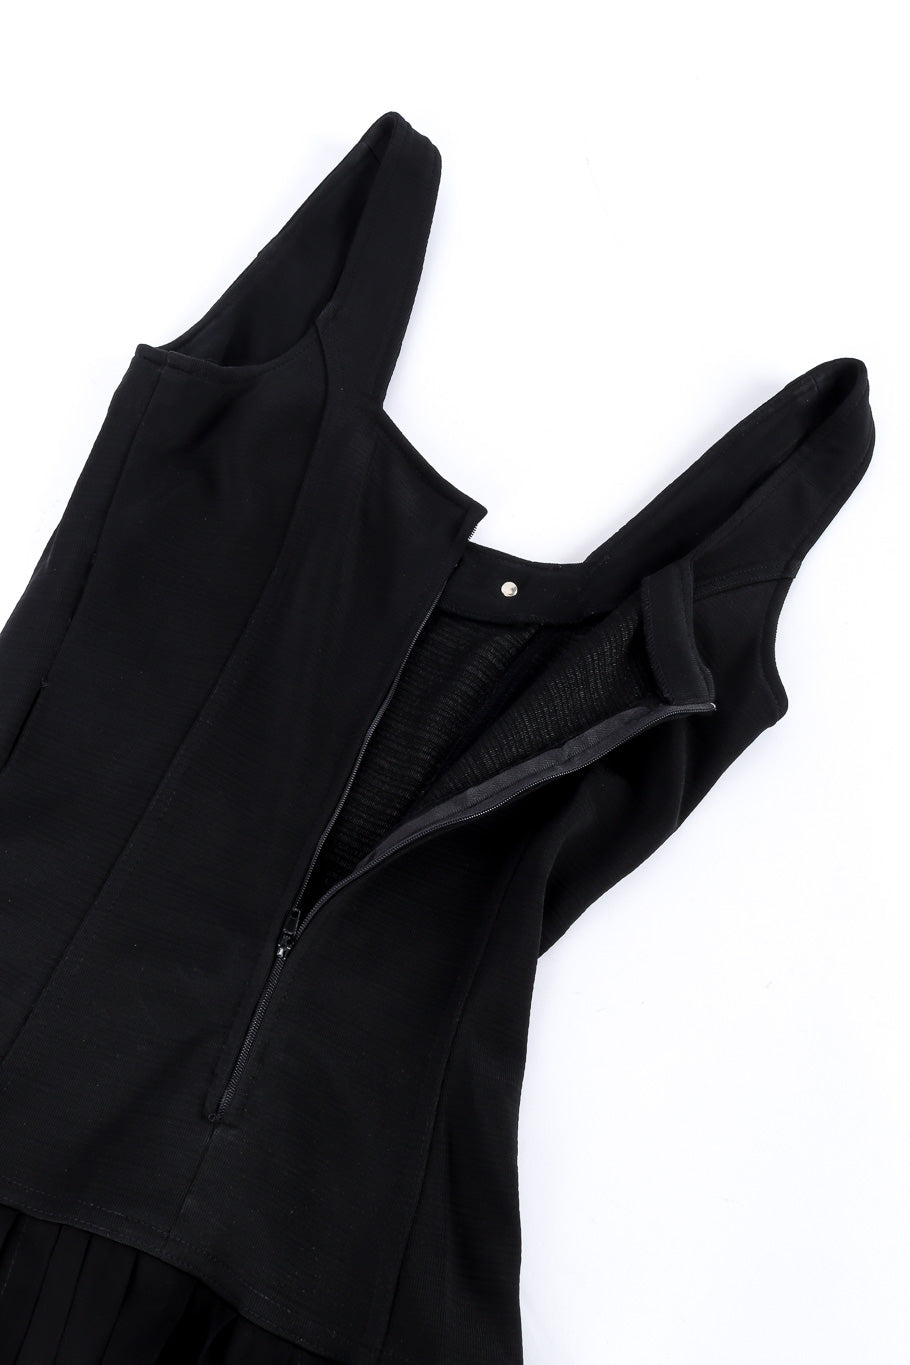 Vintage John Murrough Studded Maxi Dress zipper closeup @Recessla